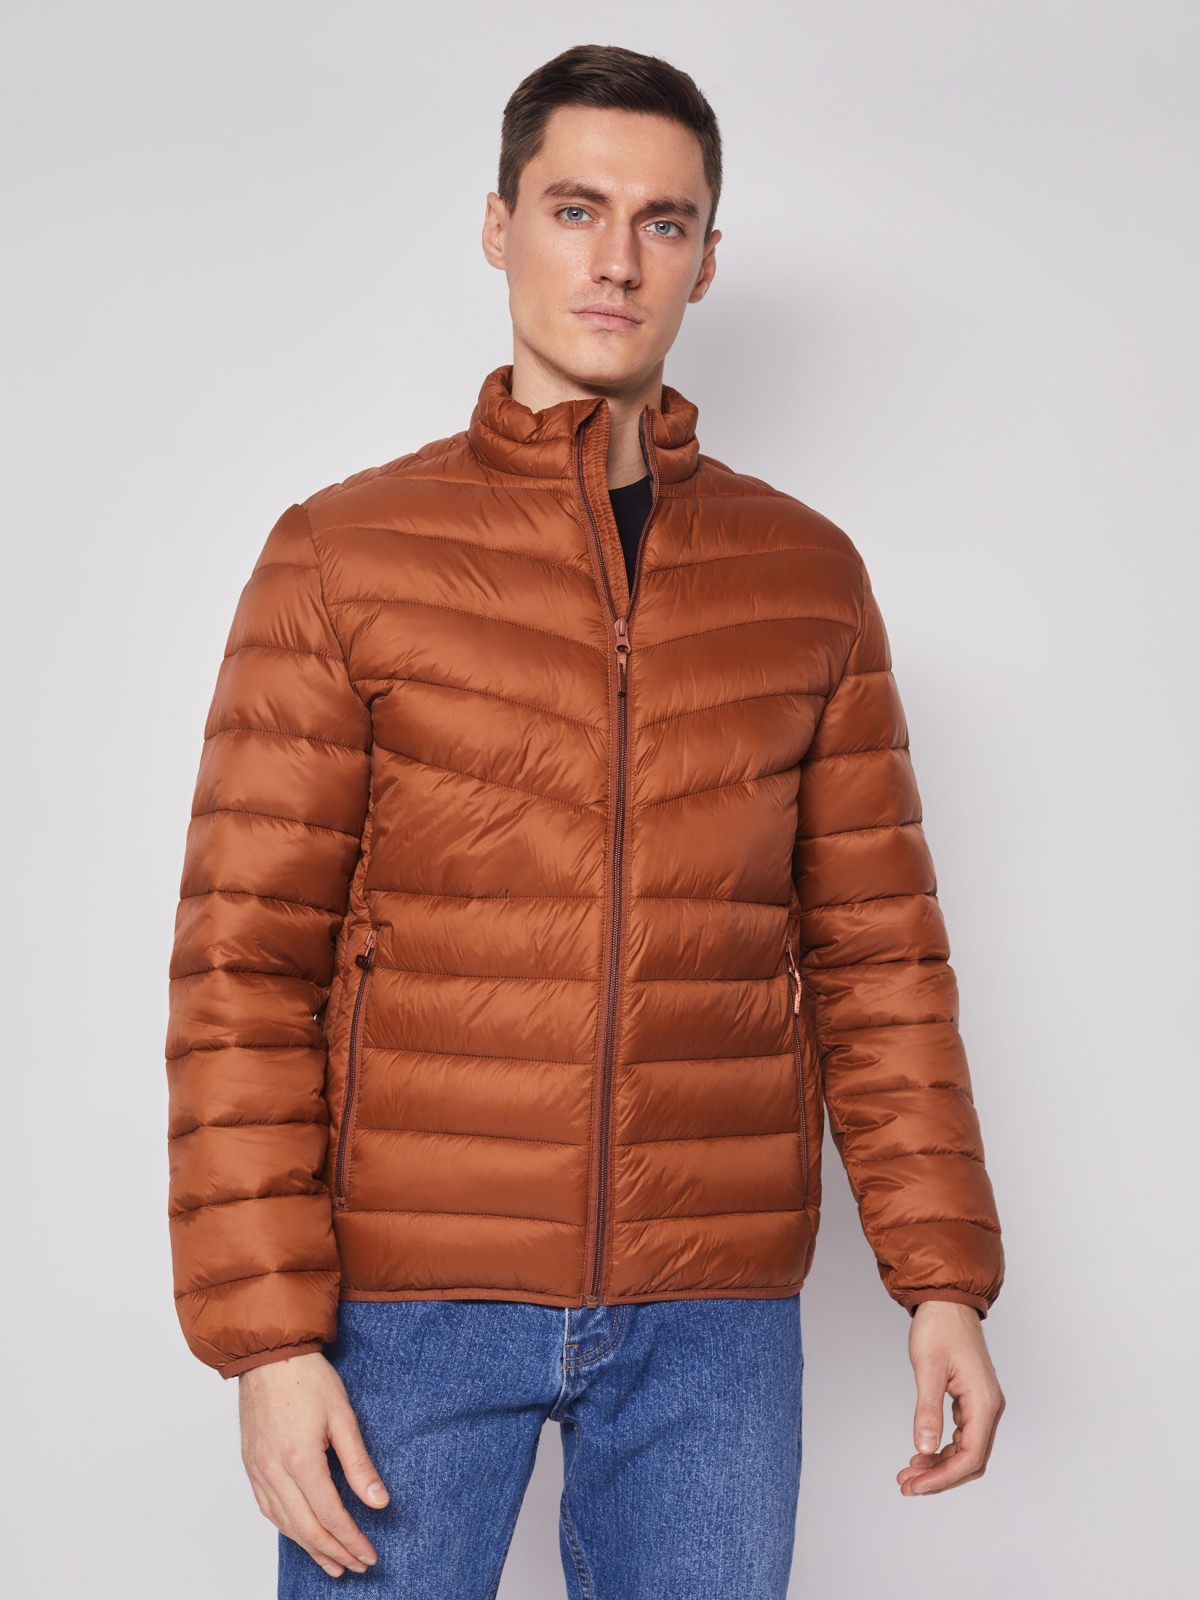 Утеплённая куртка с воротником zolla 012125102144, цвет терракота, размер S - фото 5